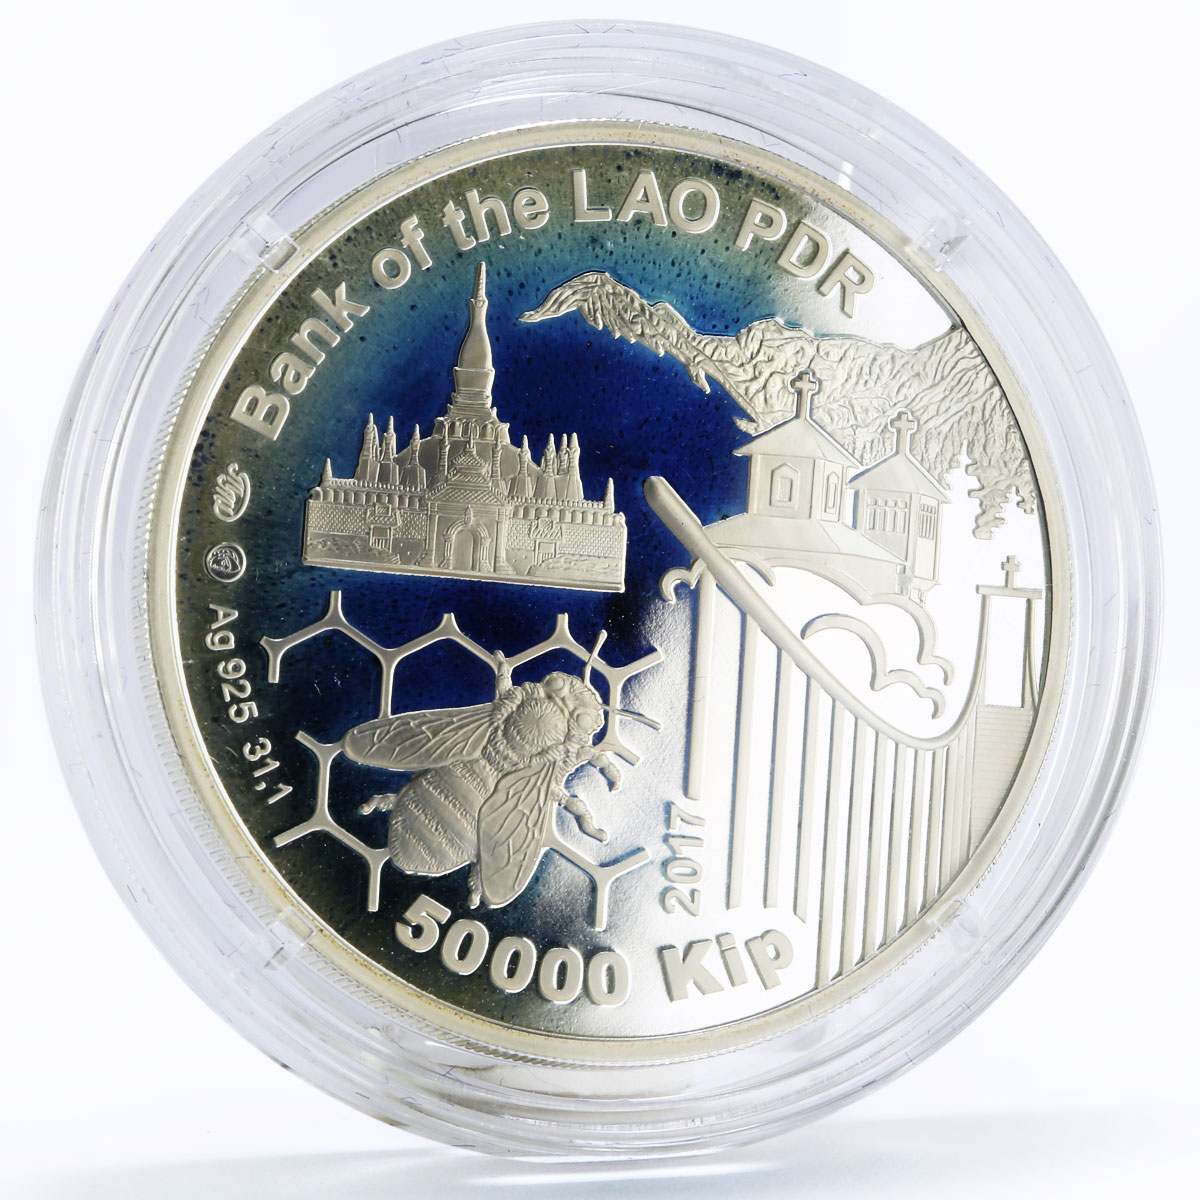 Laos 50000 kip Russian Cities series Altai Wood silver coin 2017